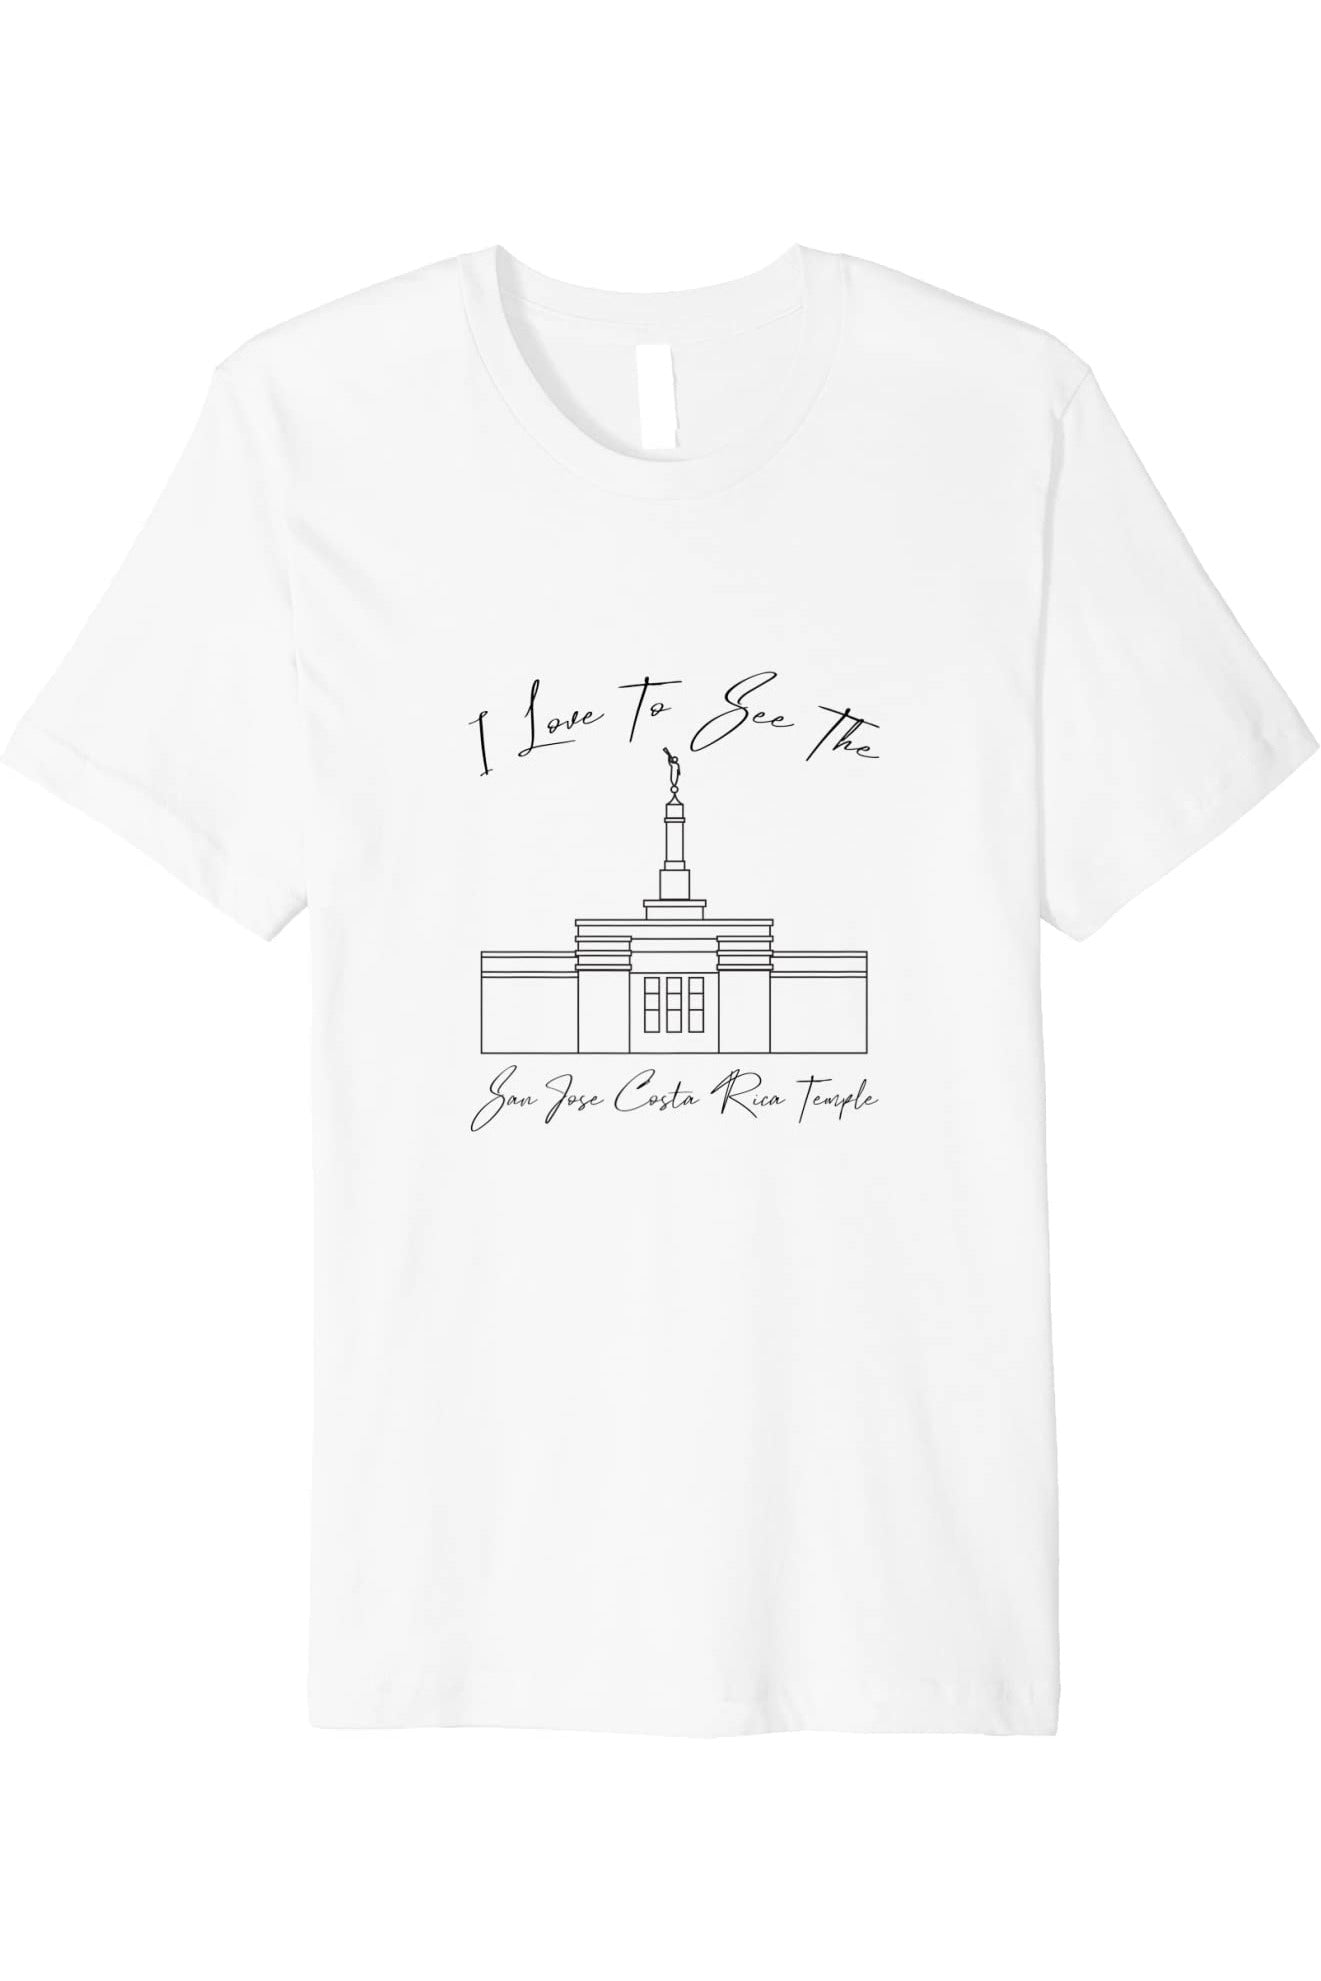 San Jose Costa Rica Temple T-Shirt - Premium - Calligraphy Style (English) US